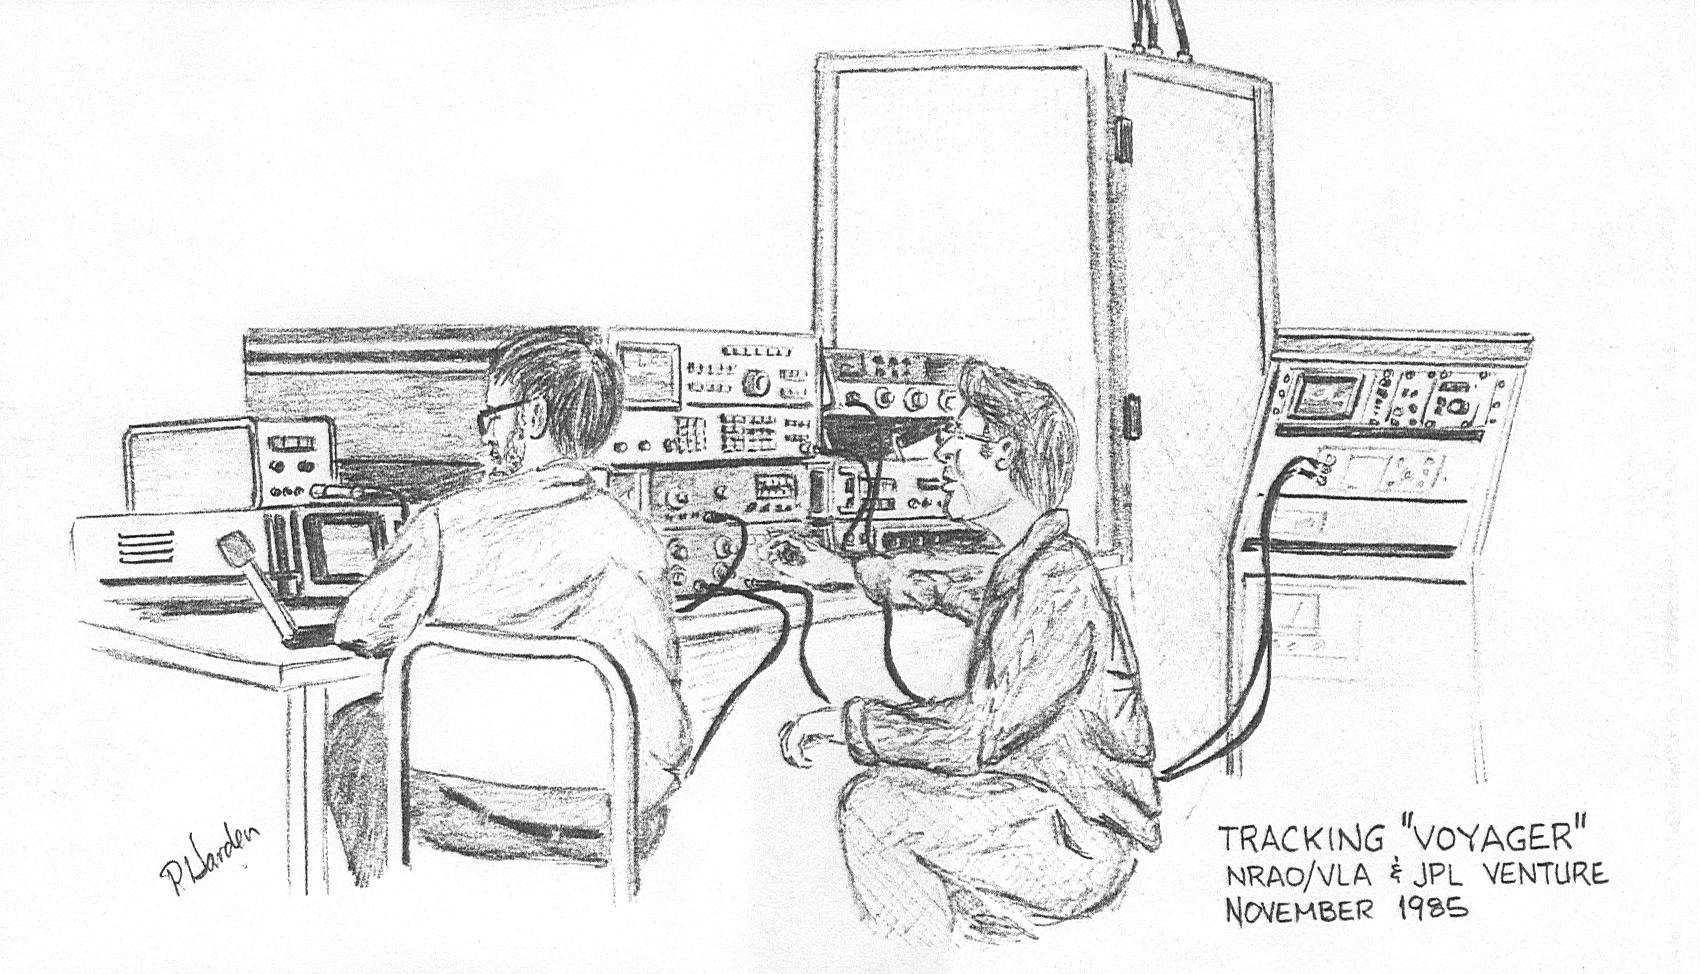 Preparations for Tracking Voyager, November 1985